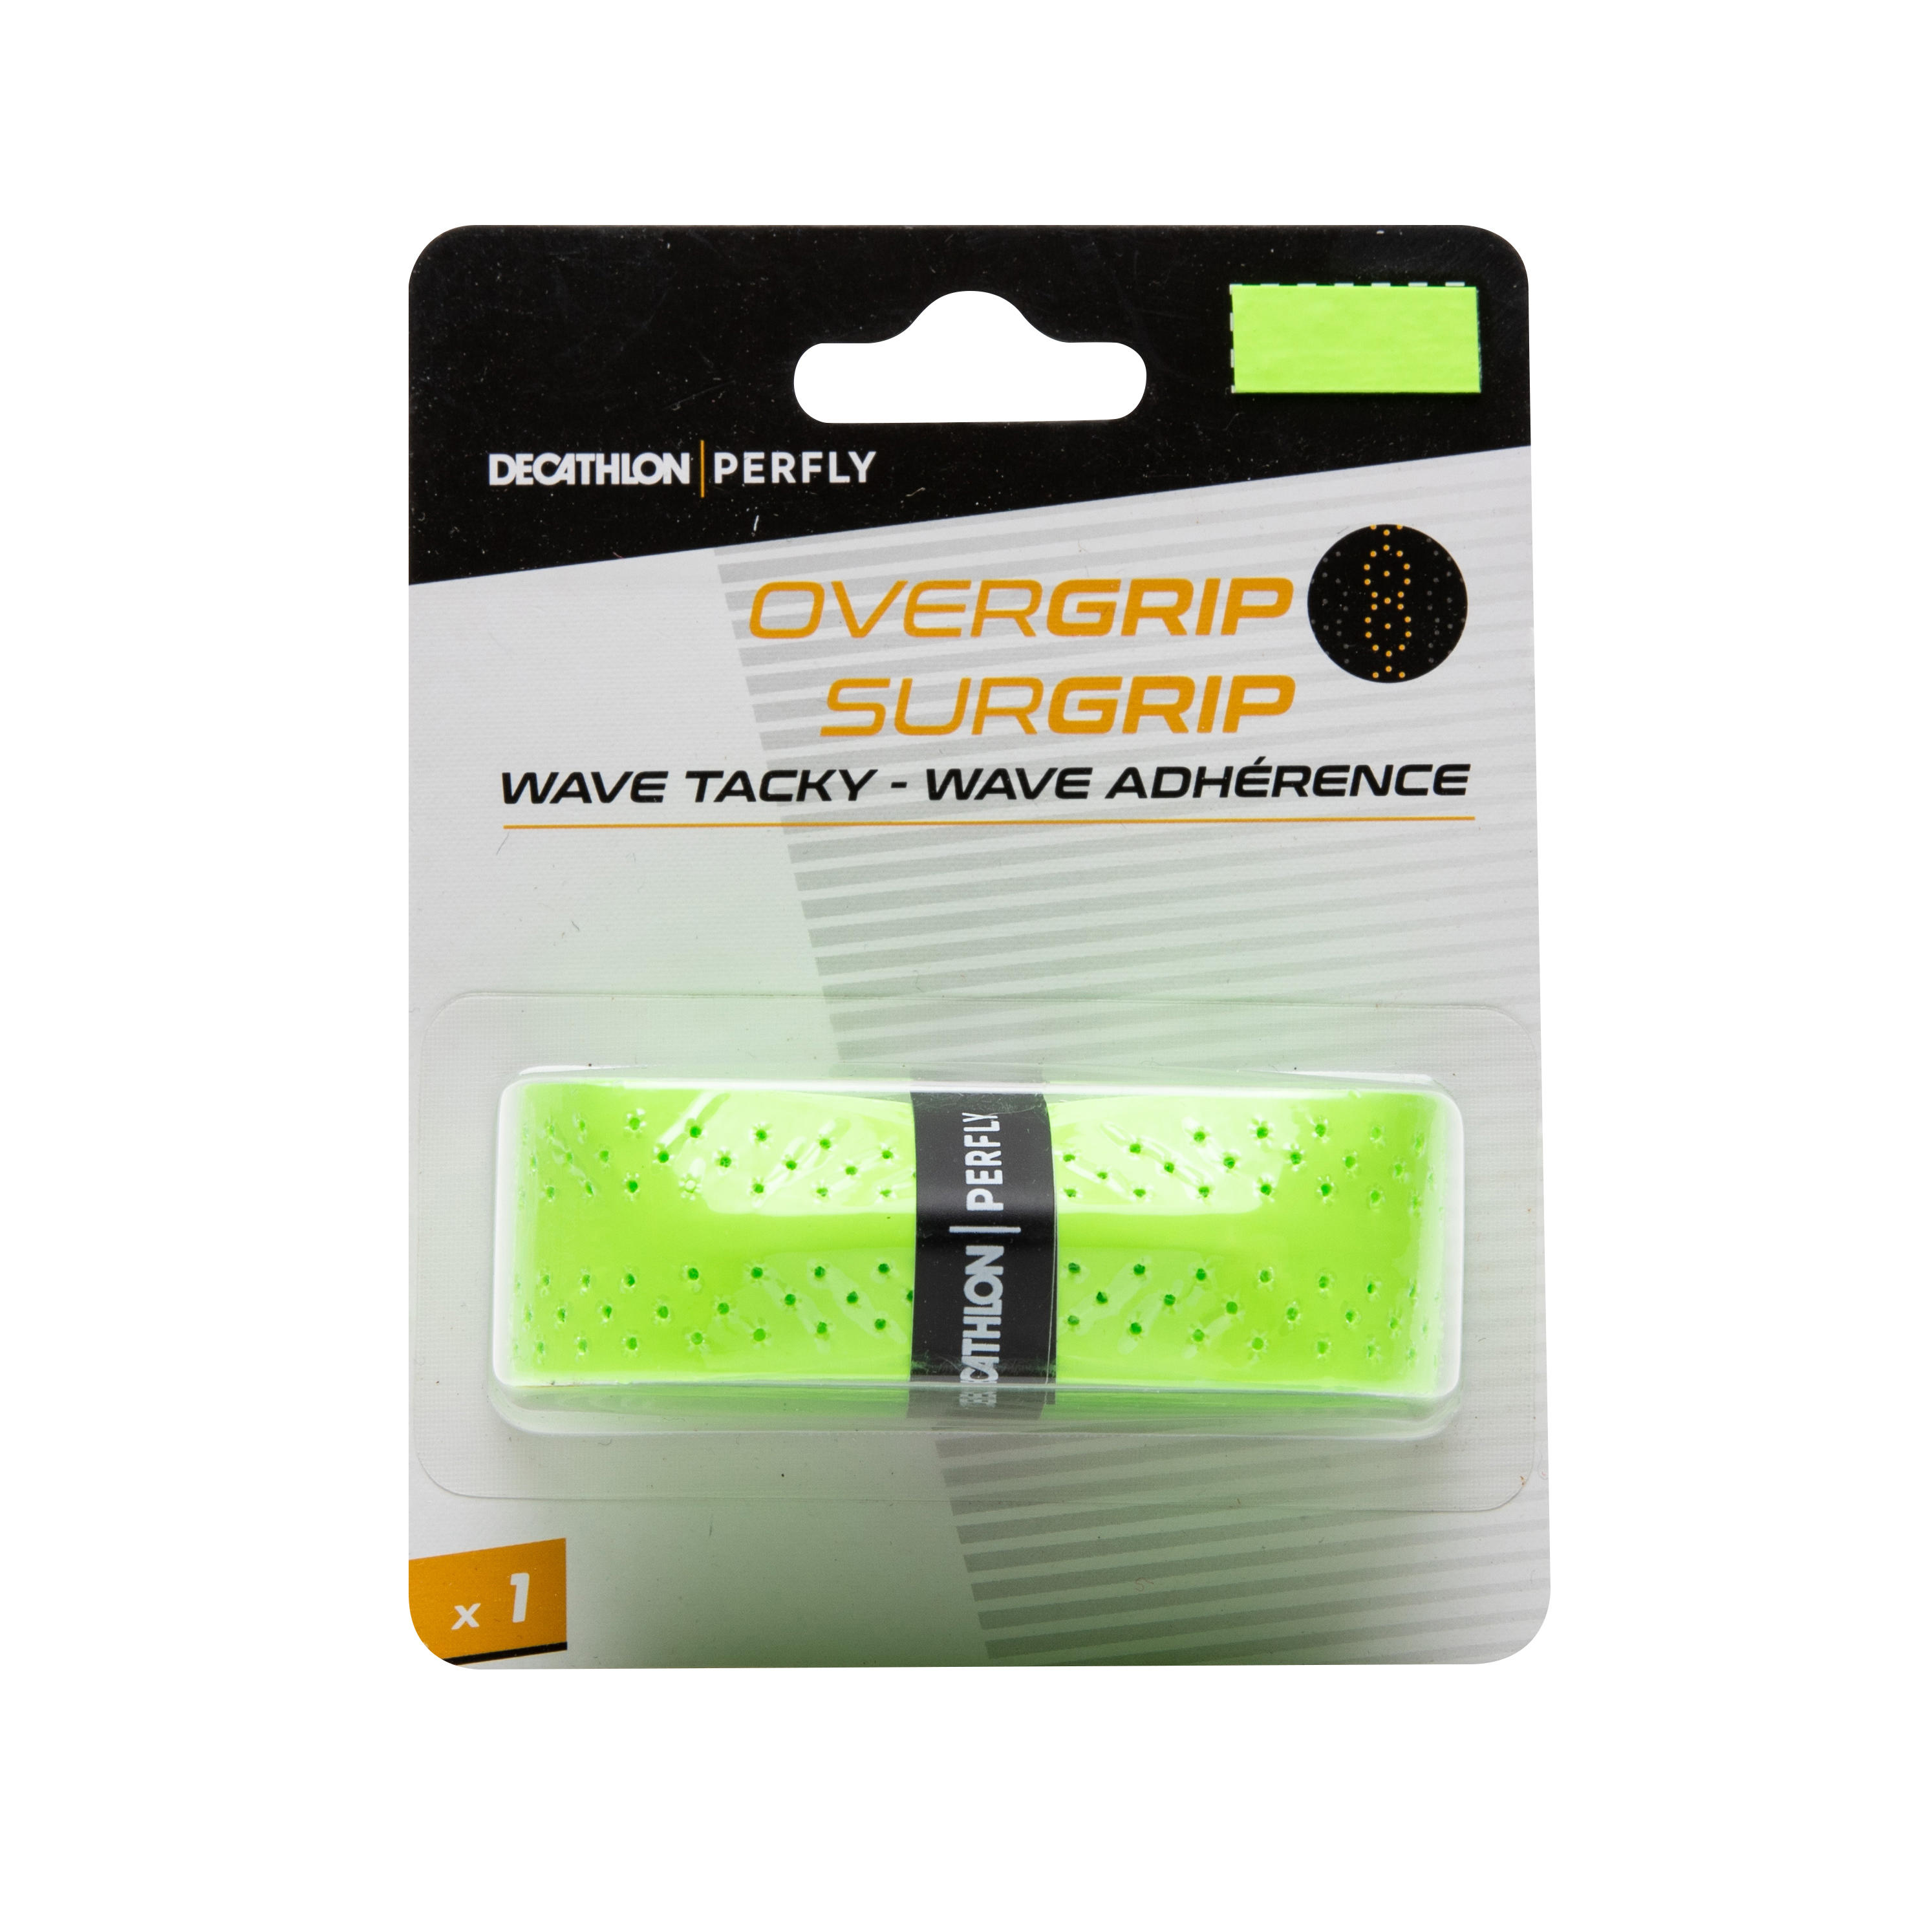 Overgrip Badminton Wave X 1 Verde Fluorescent PERFLY decathlon.ro